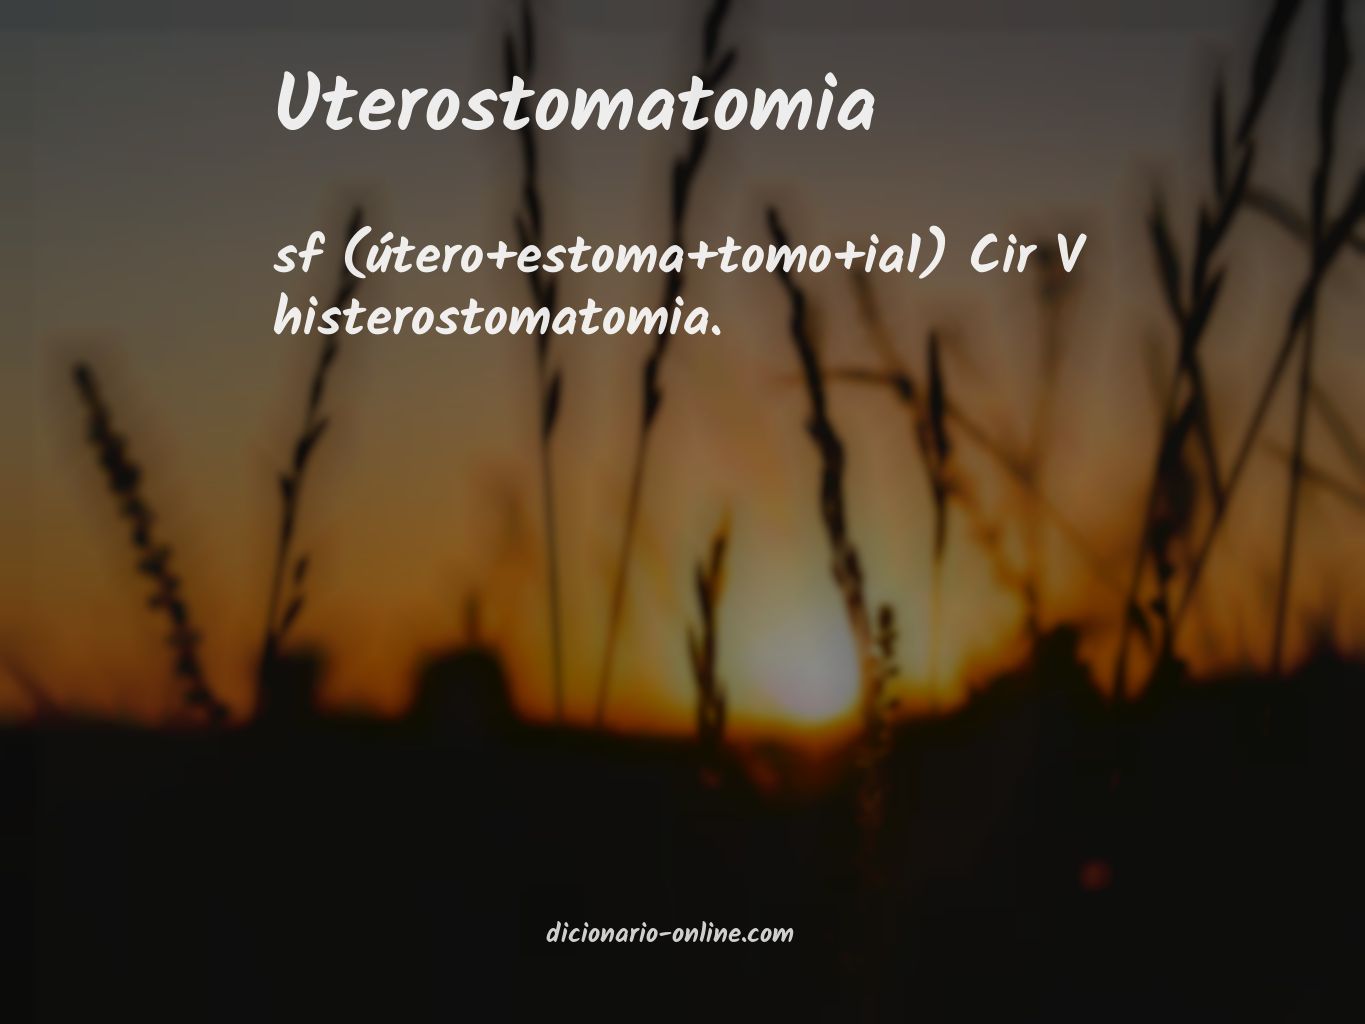 Significado de uterostomatomia